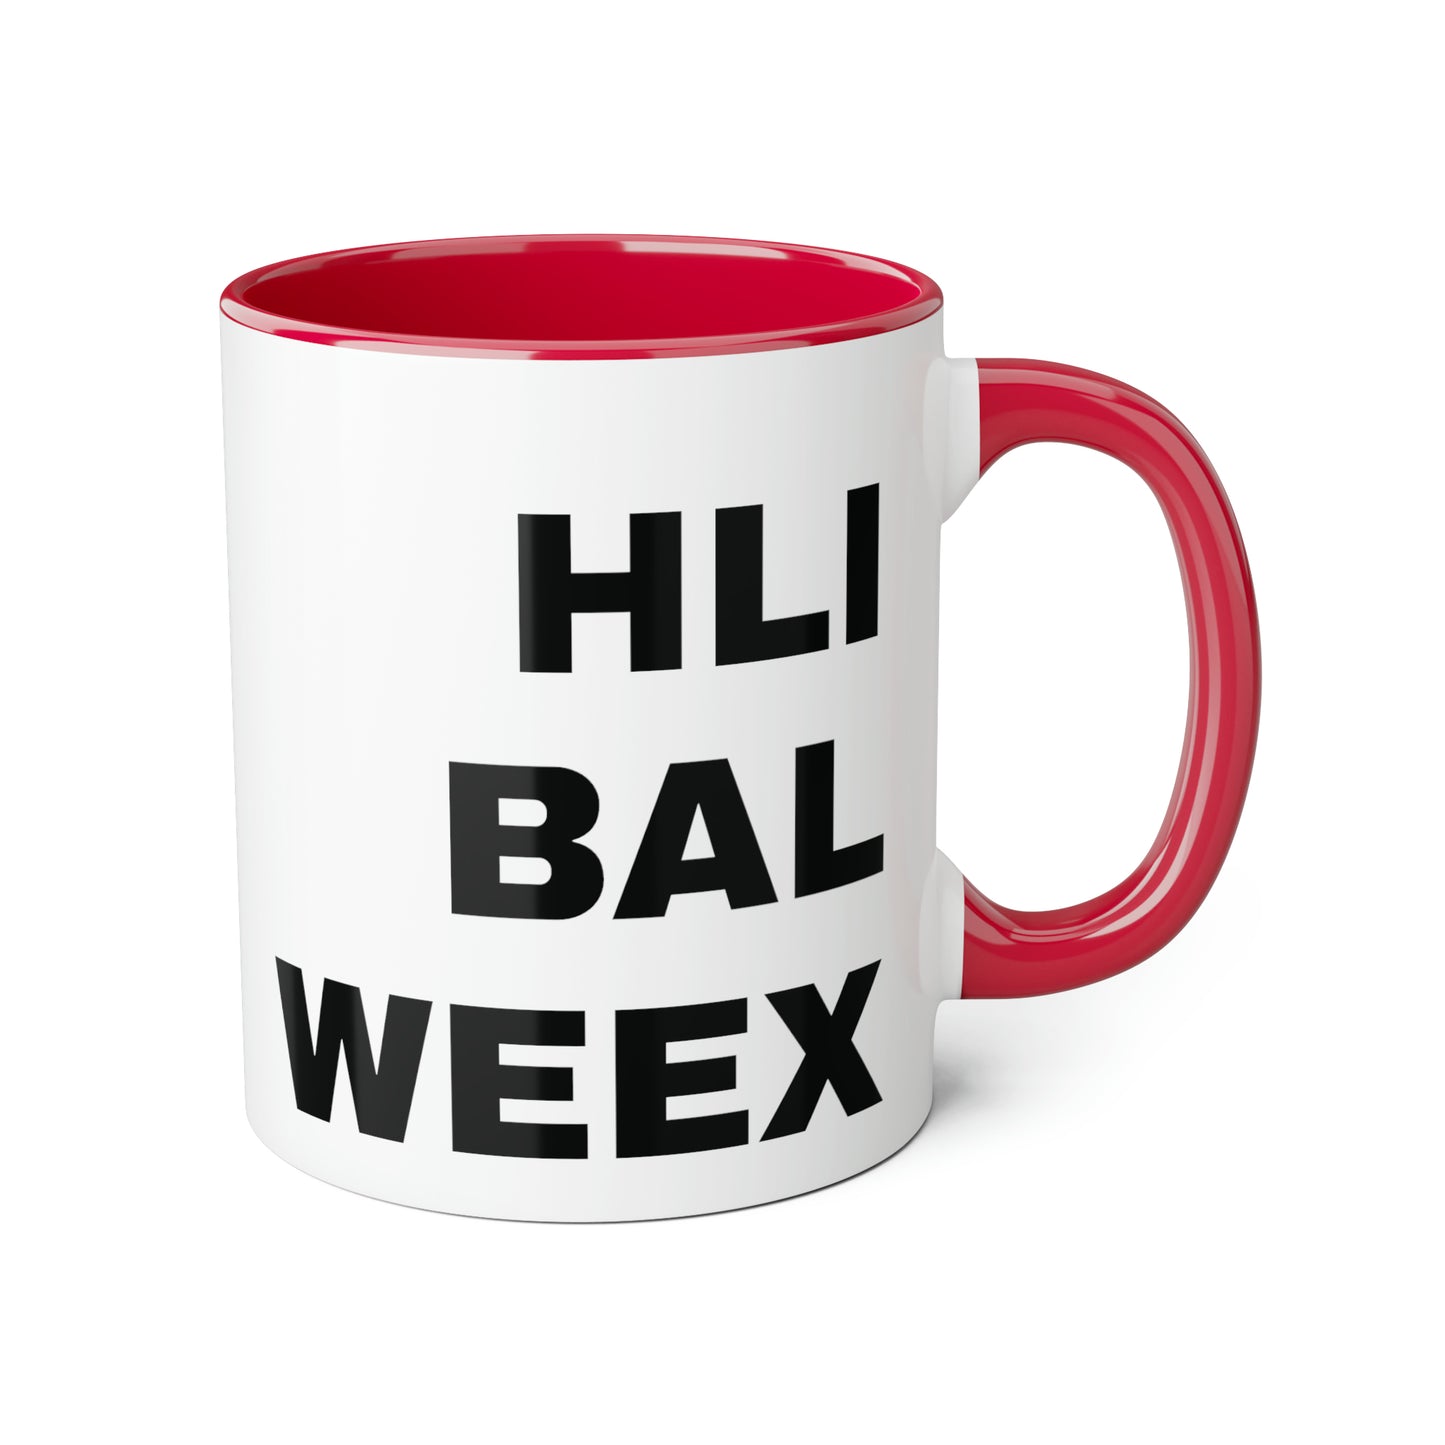 HLI BAL WEEX - EQUAL TO ONE LYNX, 11oz Accent Mugs